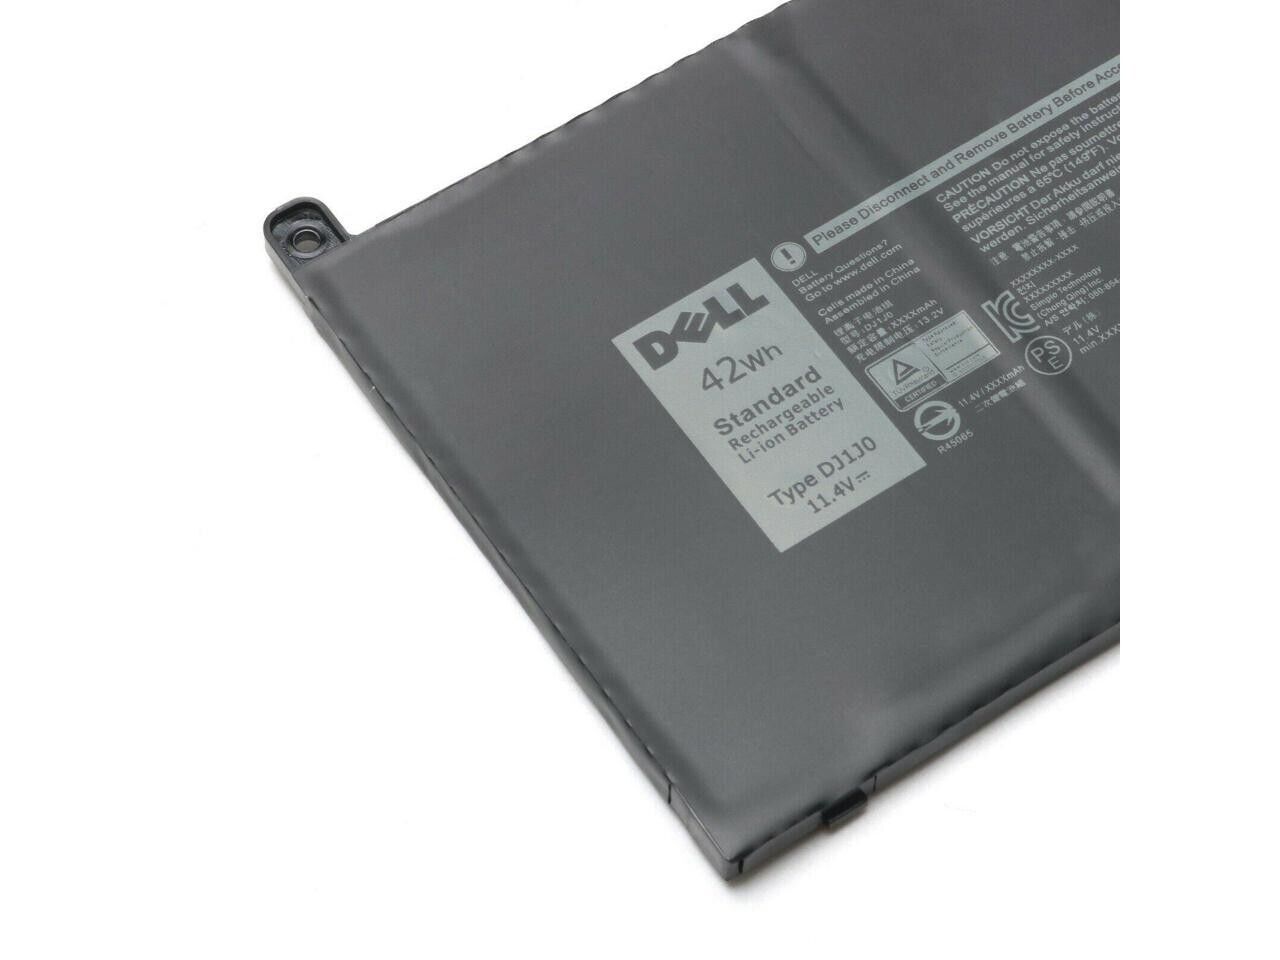 Dell DJ1J0 New Battery Latitude E7280 E7380 E7480 E7290 E7390 E7490 0DJ1J0 C27RW 0NF0H PGFX4